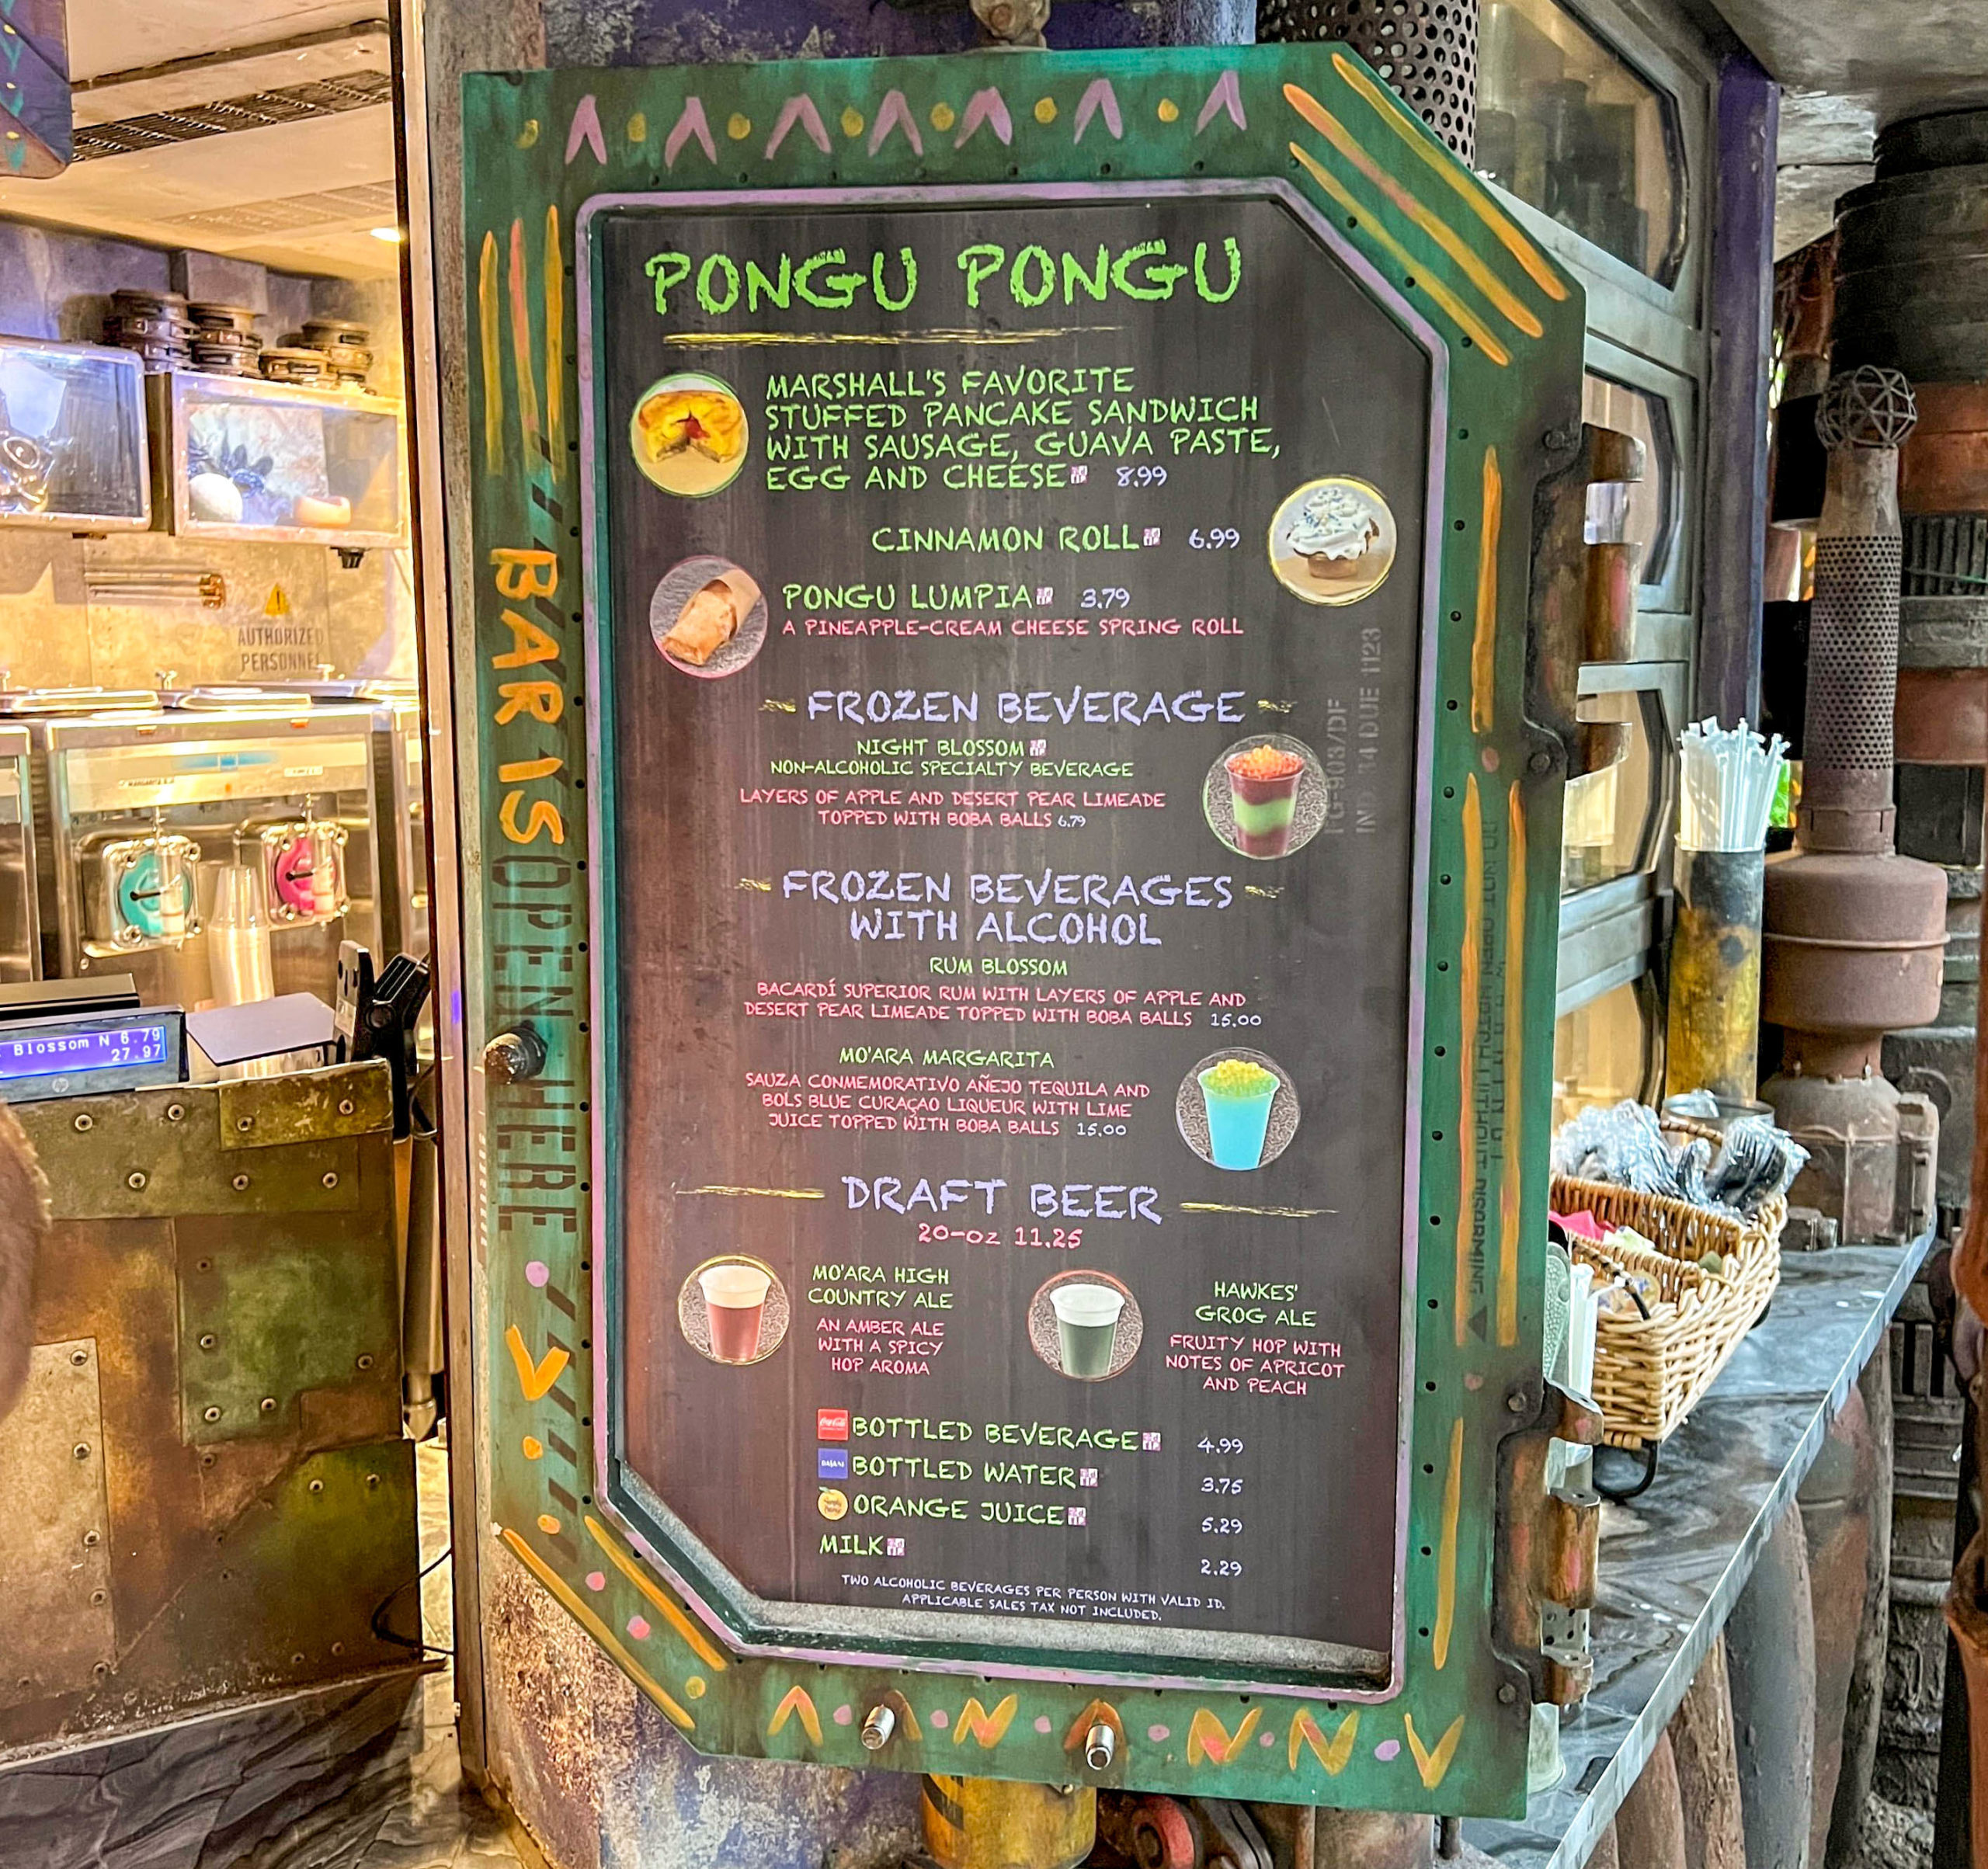 Pongu Pongu menu